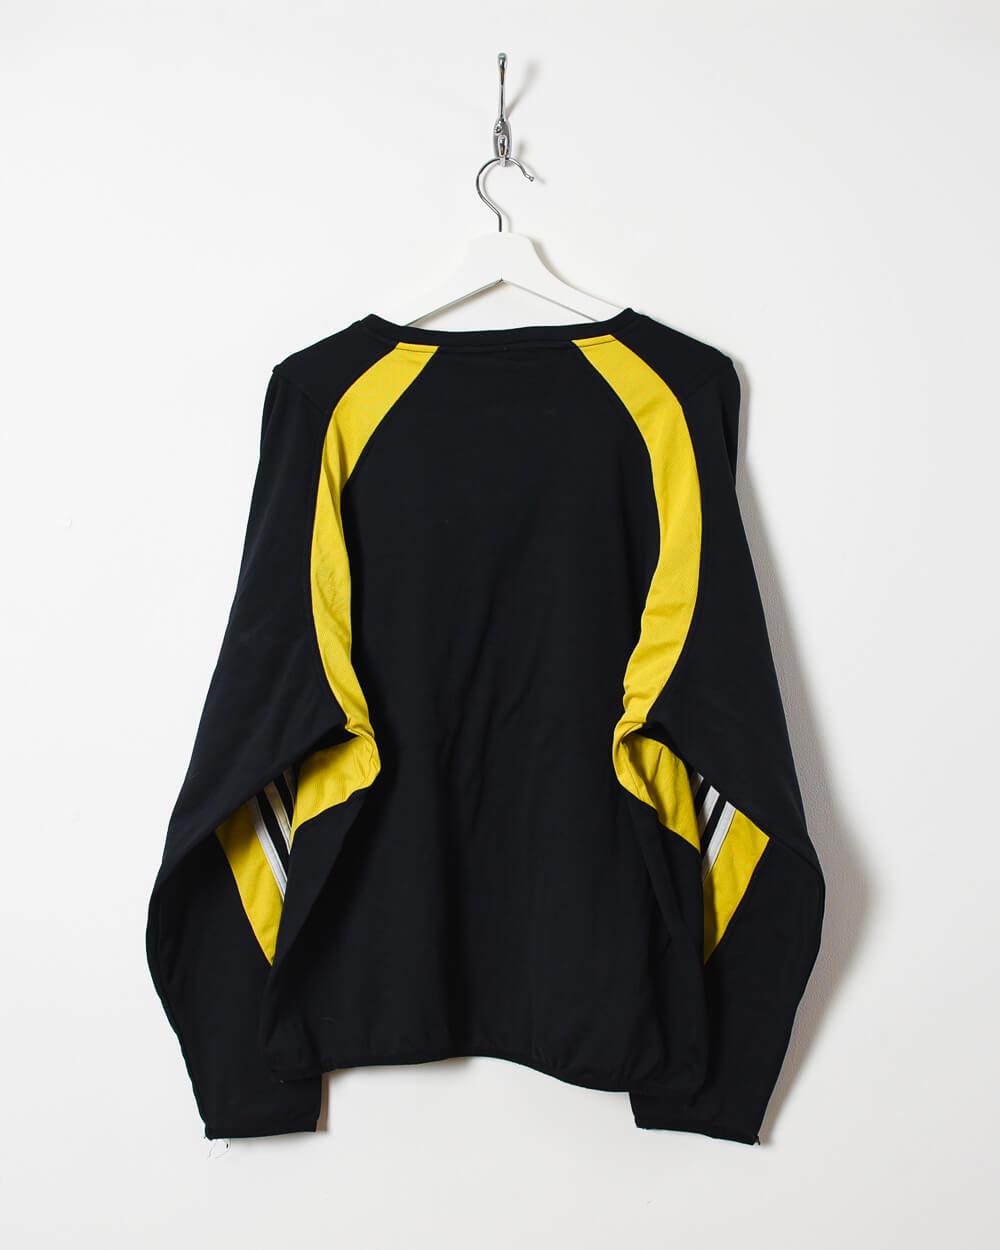 Black Adidas Nordic Memory Sweatshirt - Medium